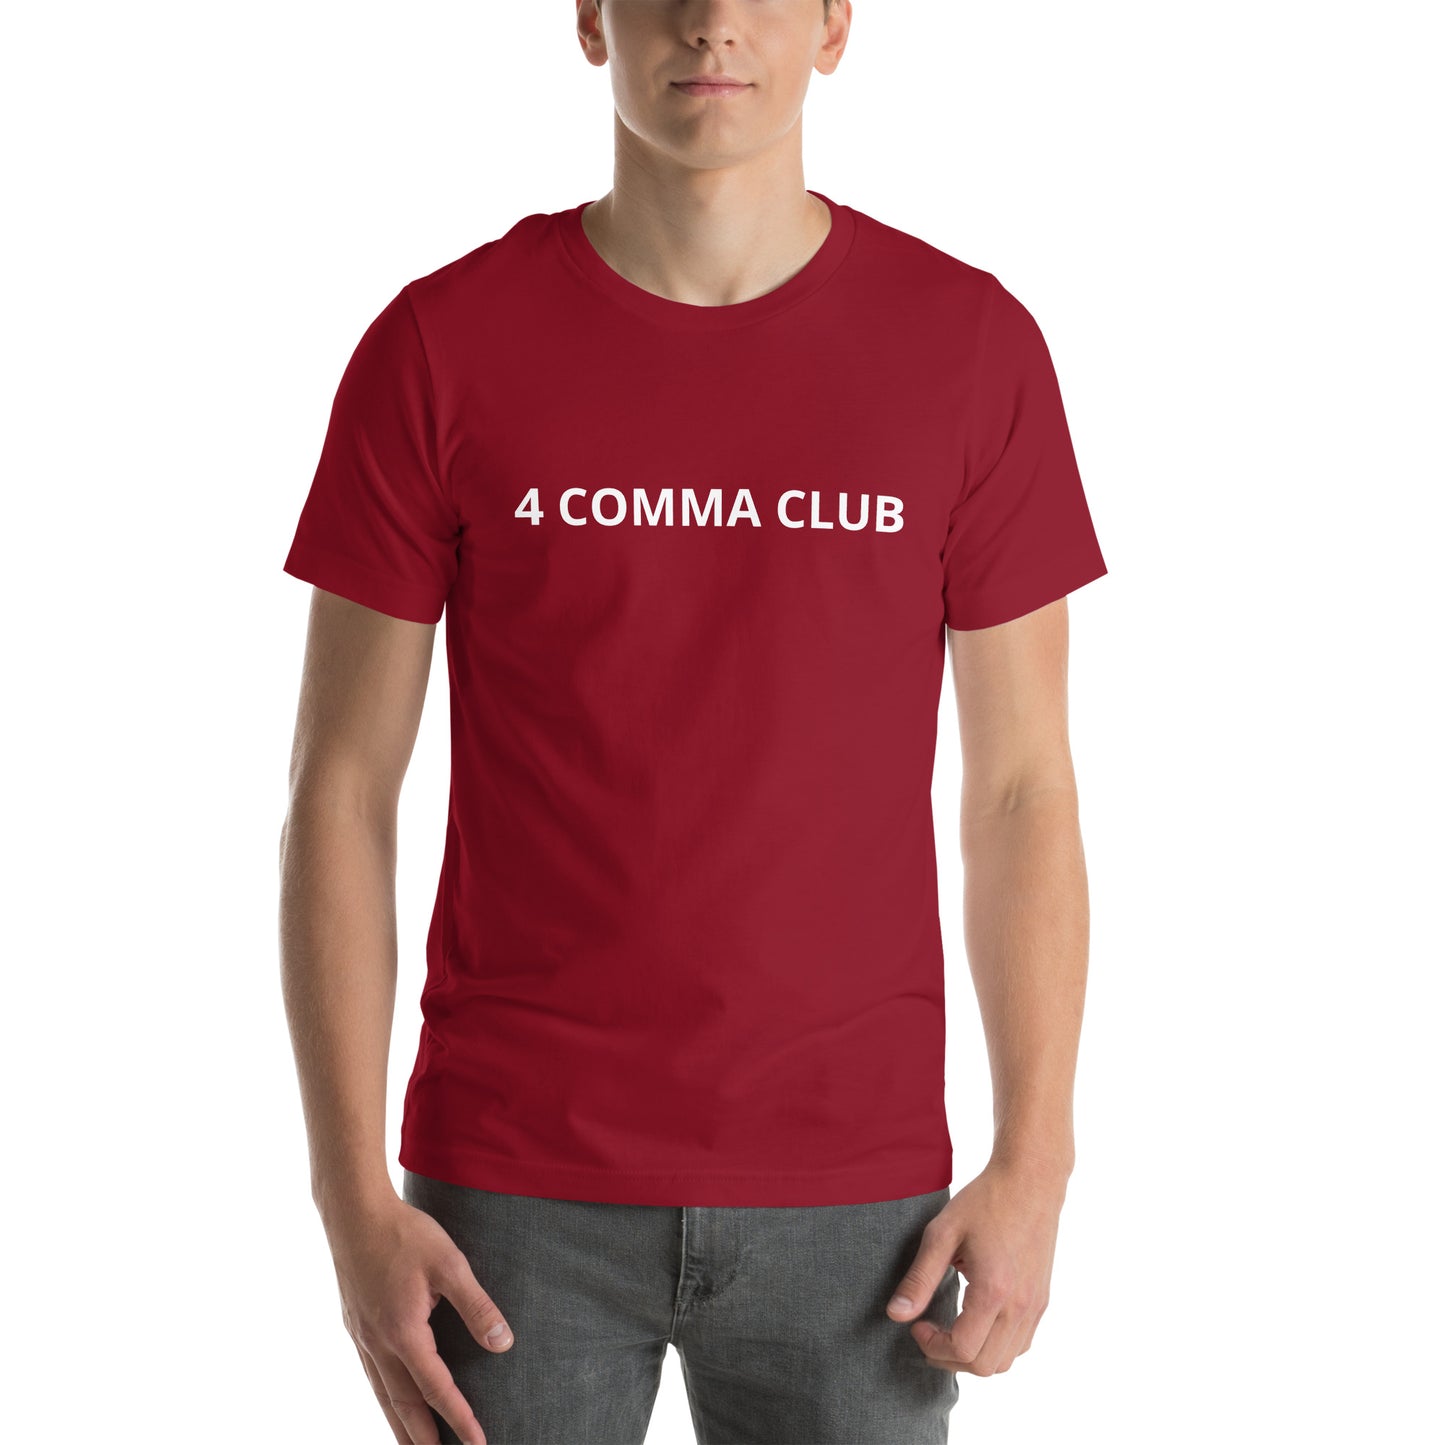 4 COMMA CLUB Unisex t-shirt